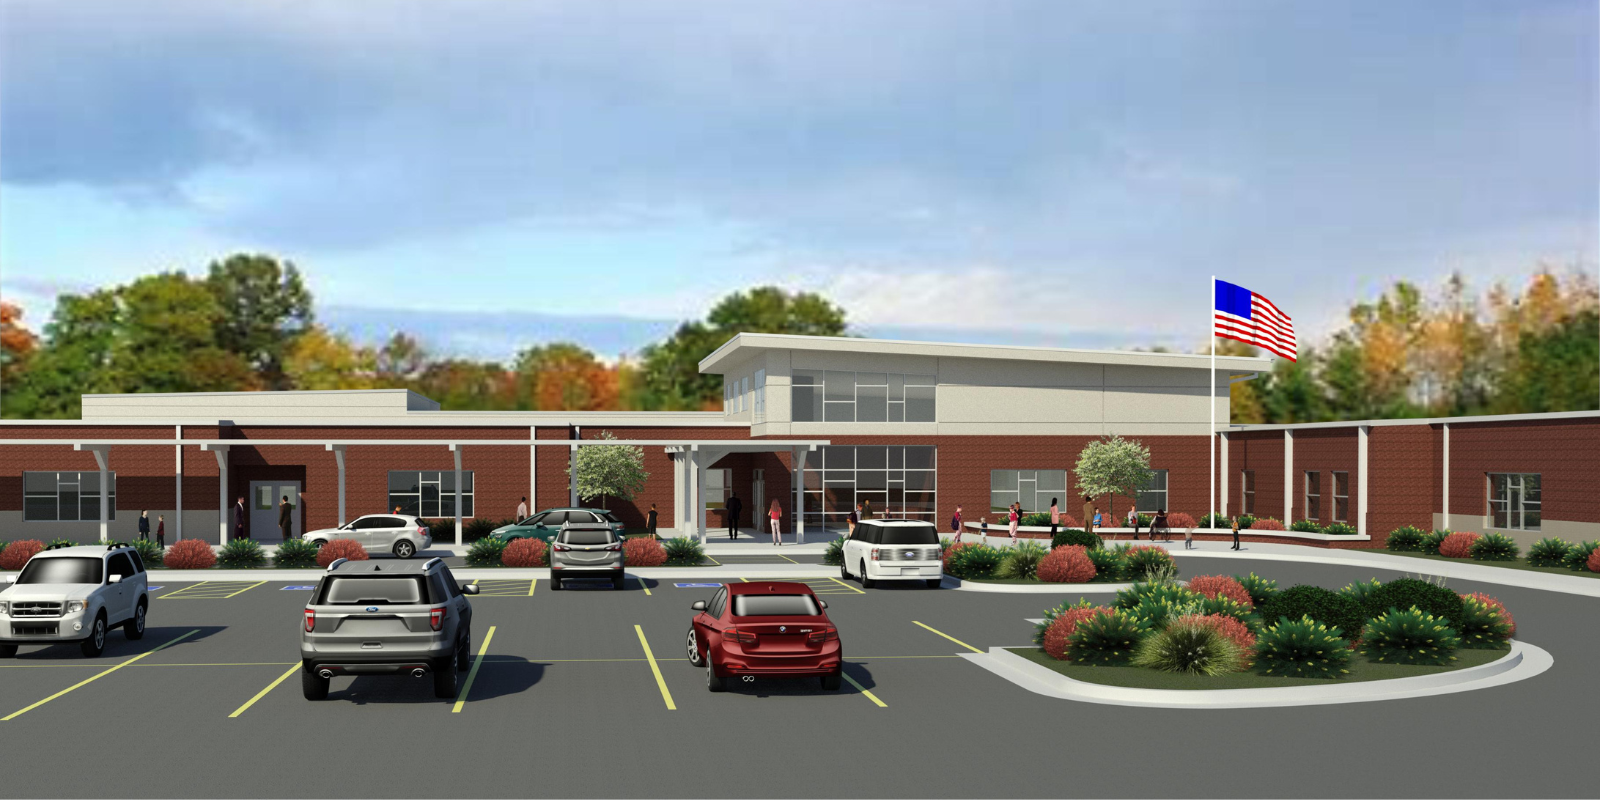 New Elementary School rendering